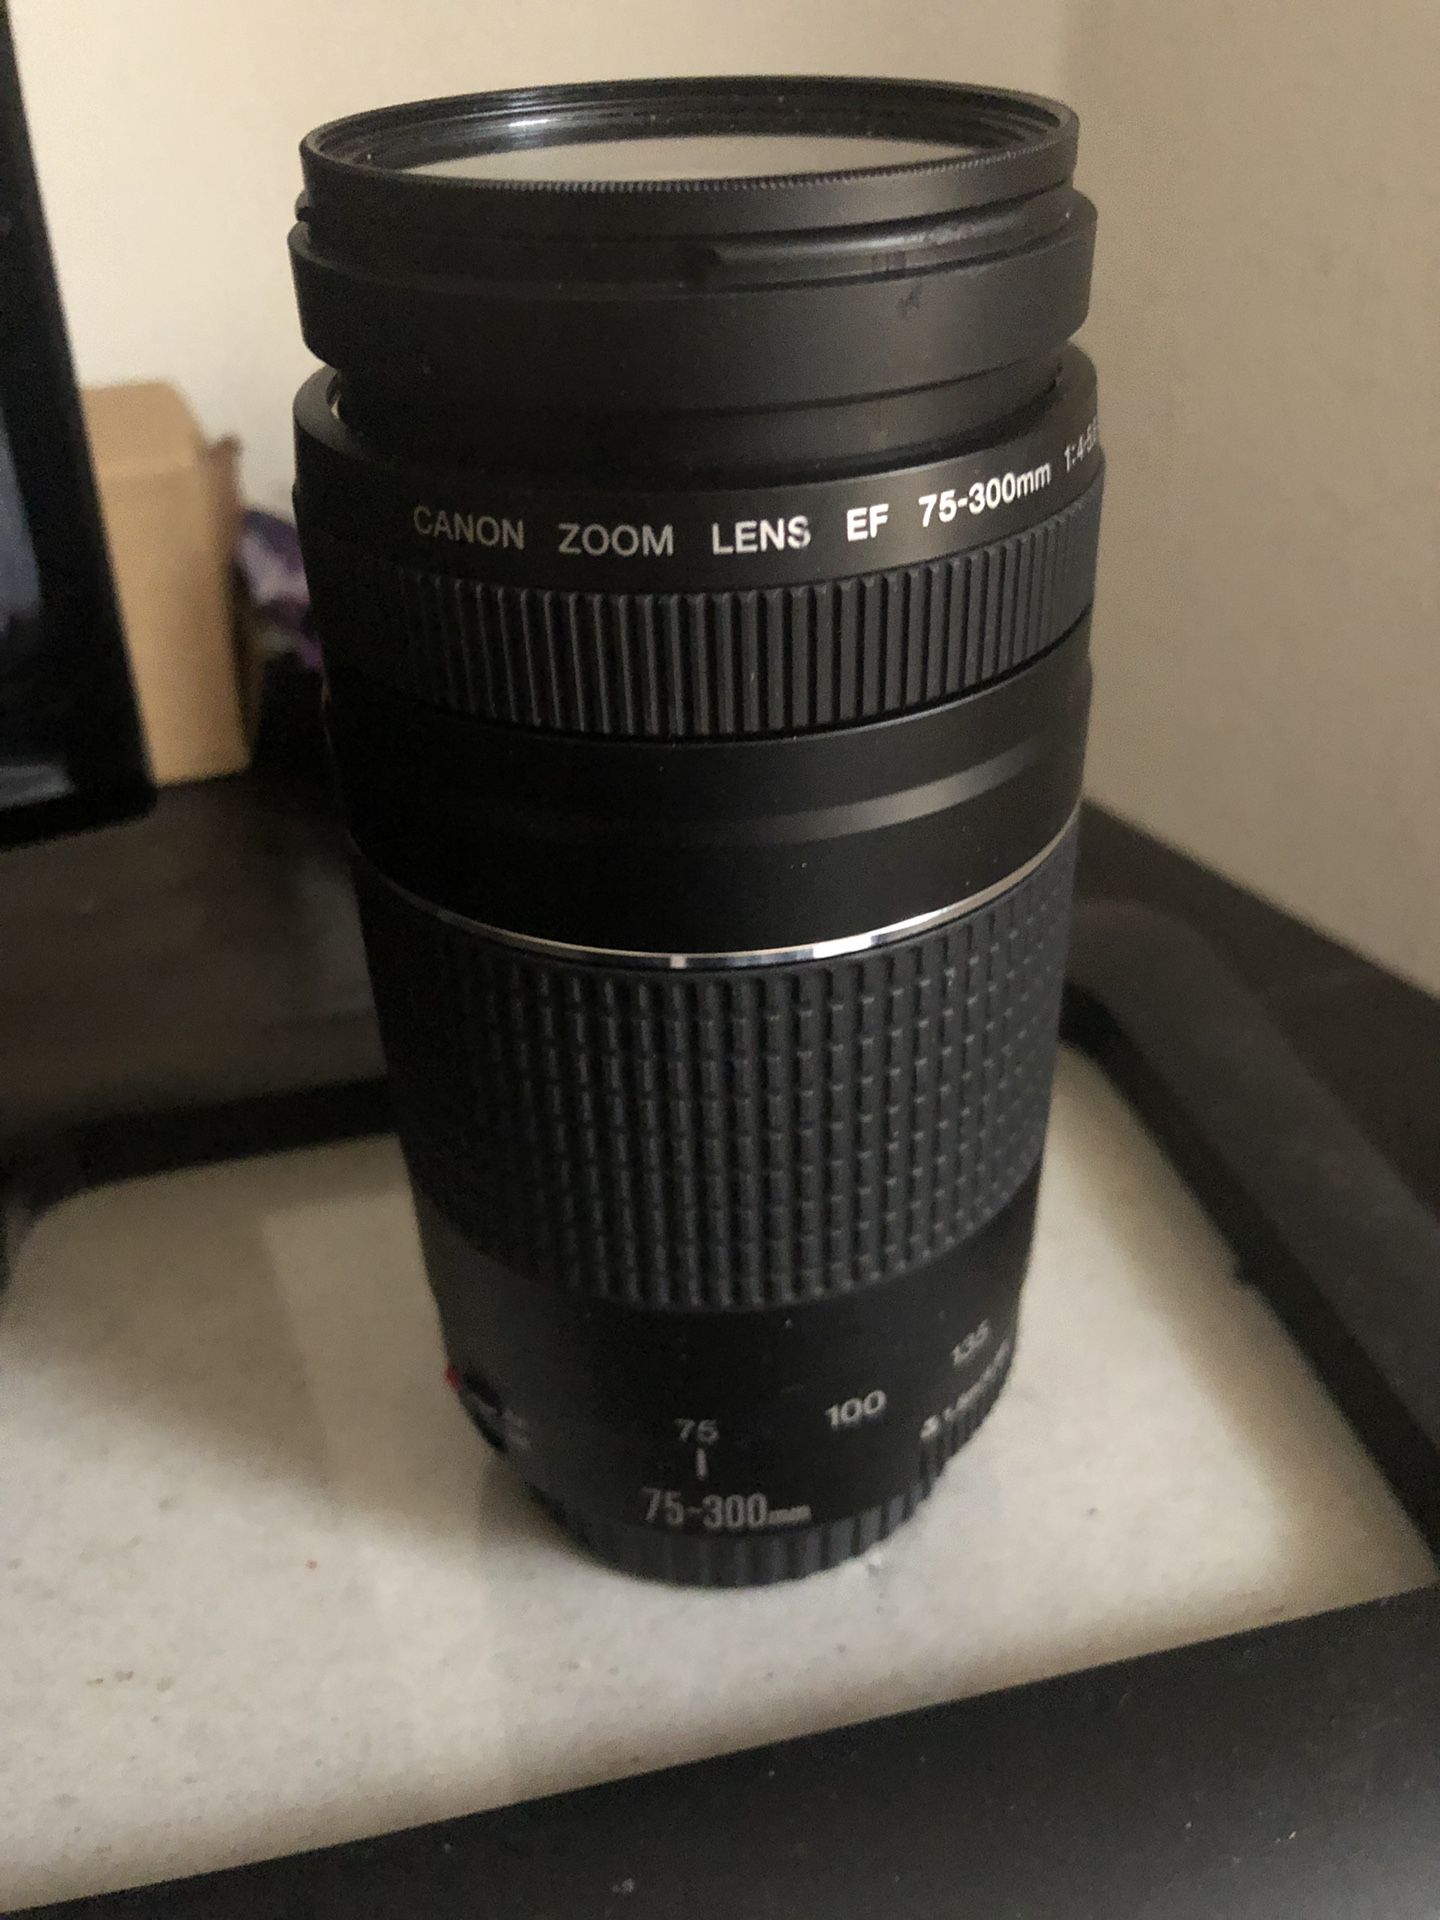 75-300mm canon lens